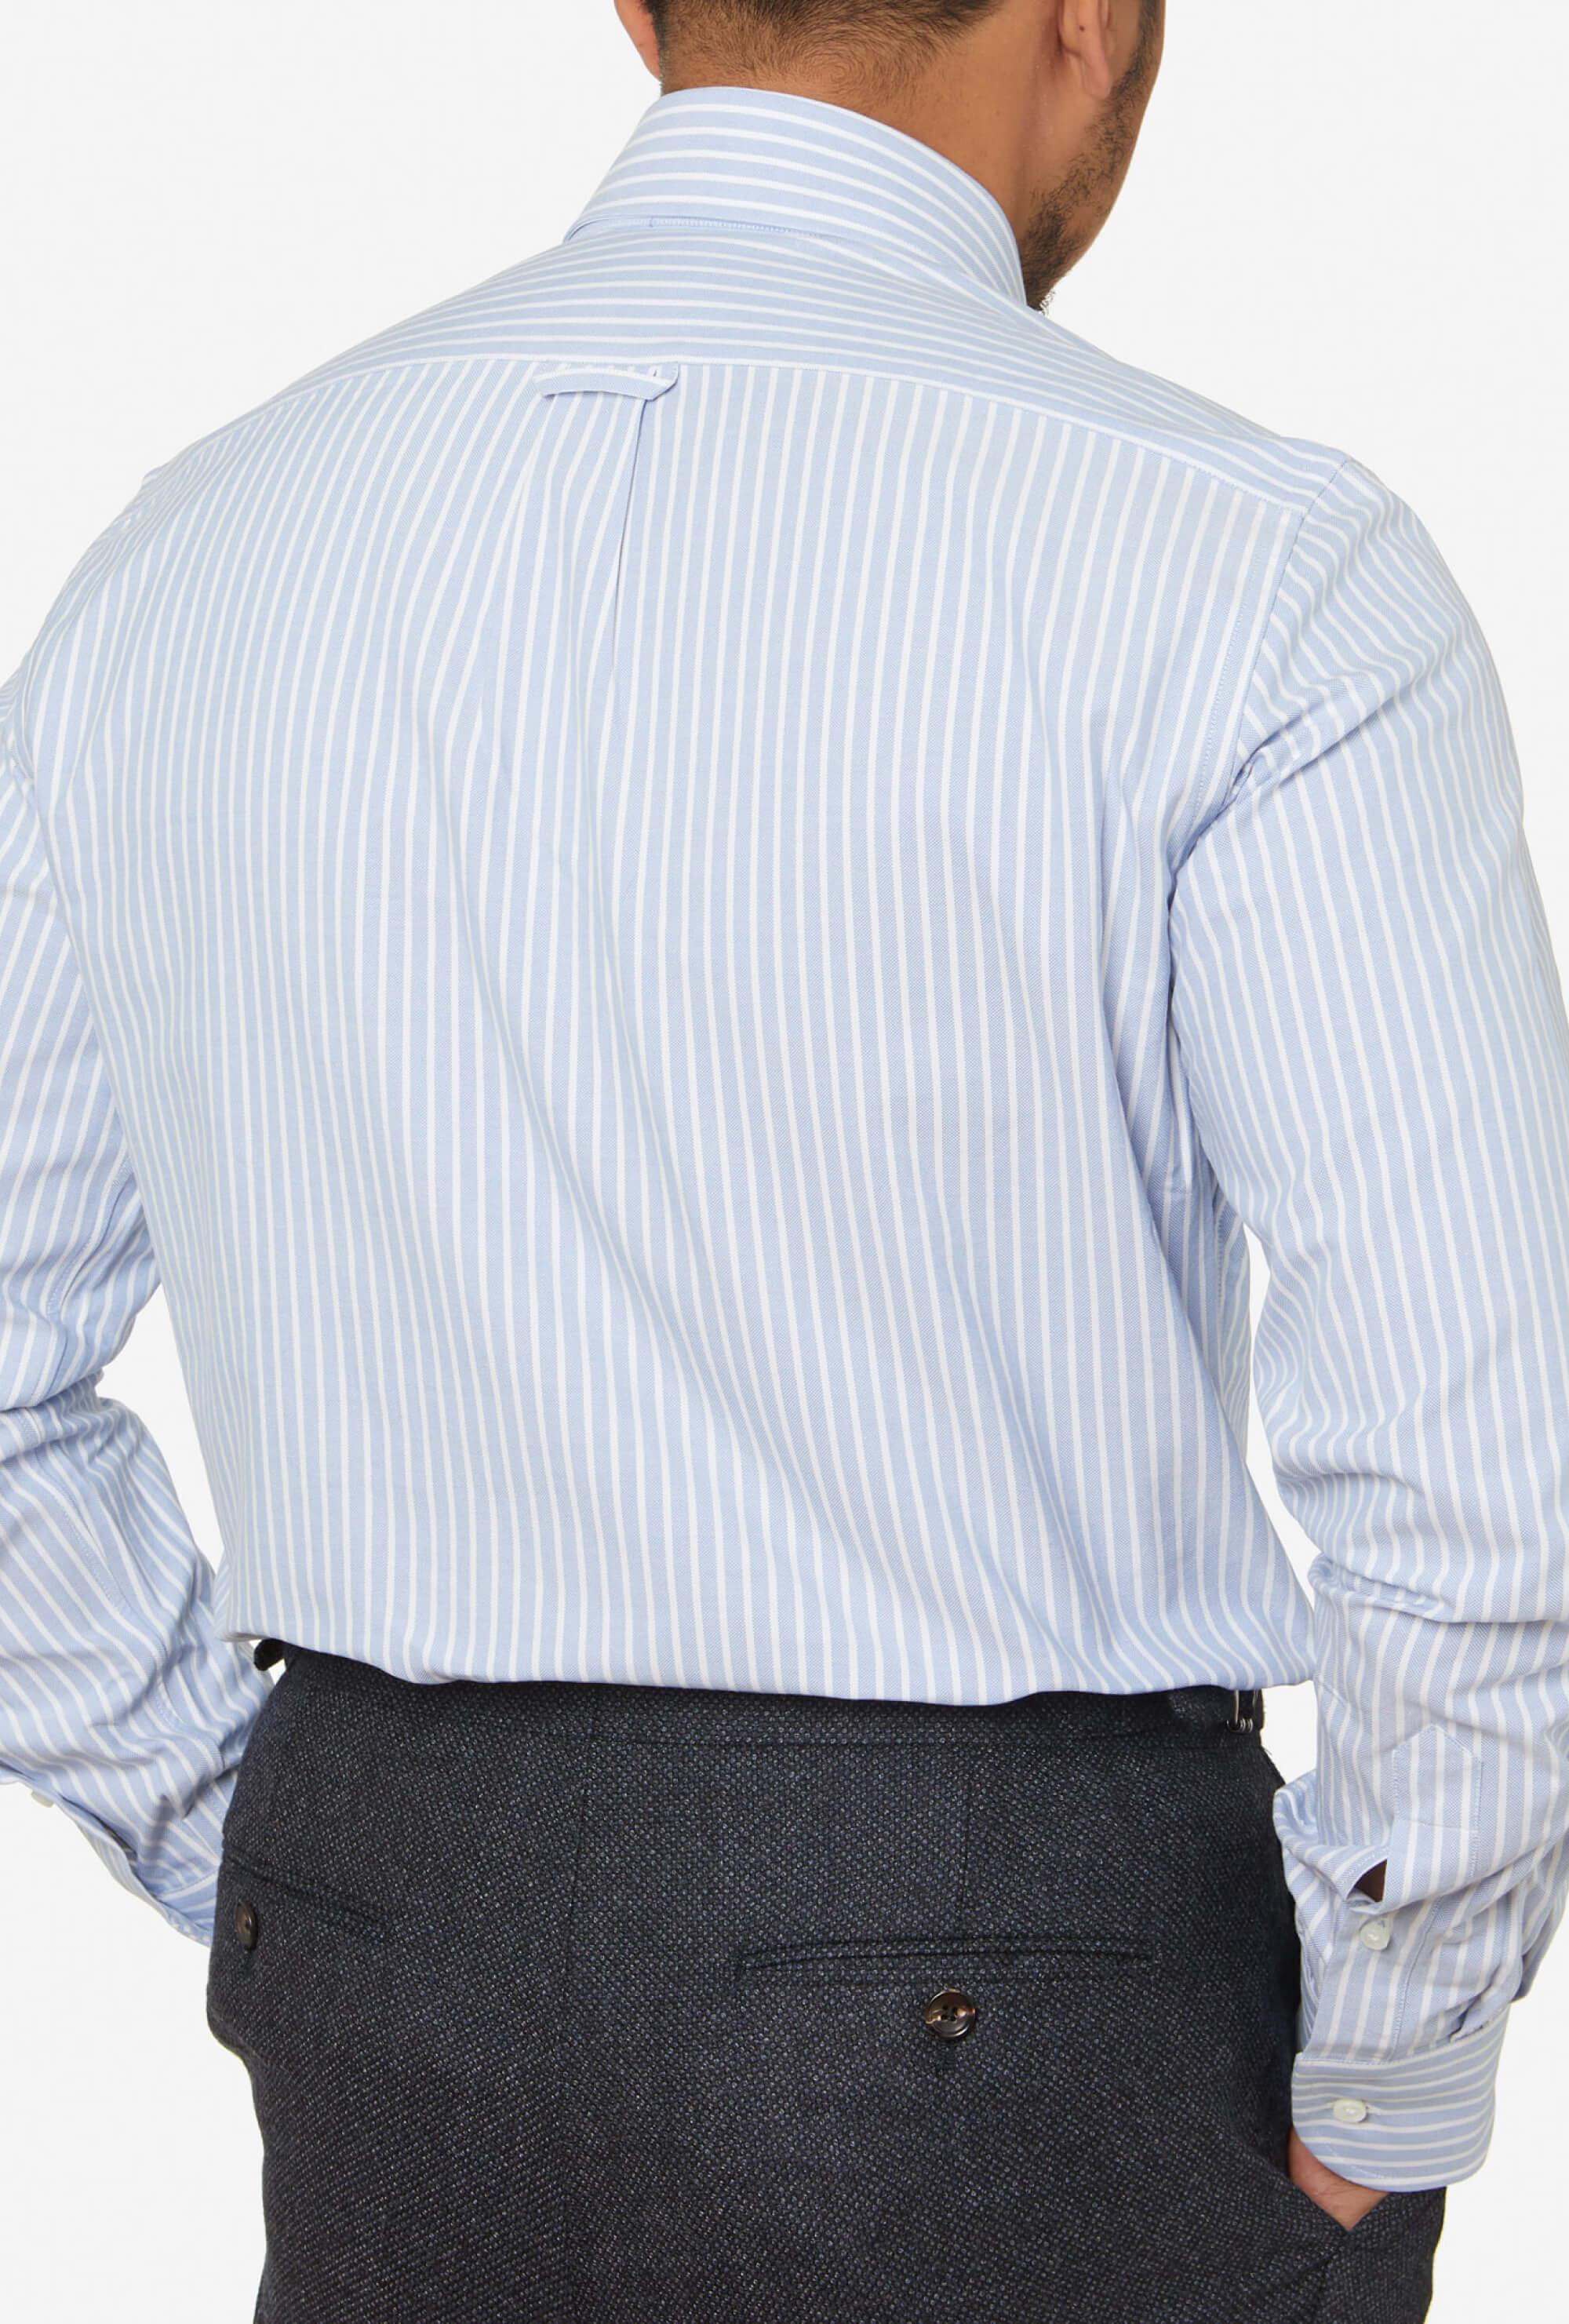 OCBD Shirt Reverse Stripe Blue Oxford